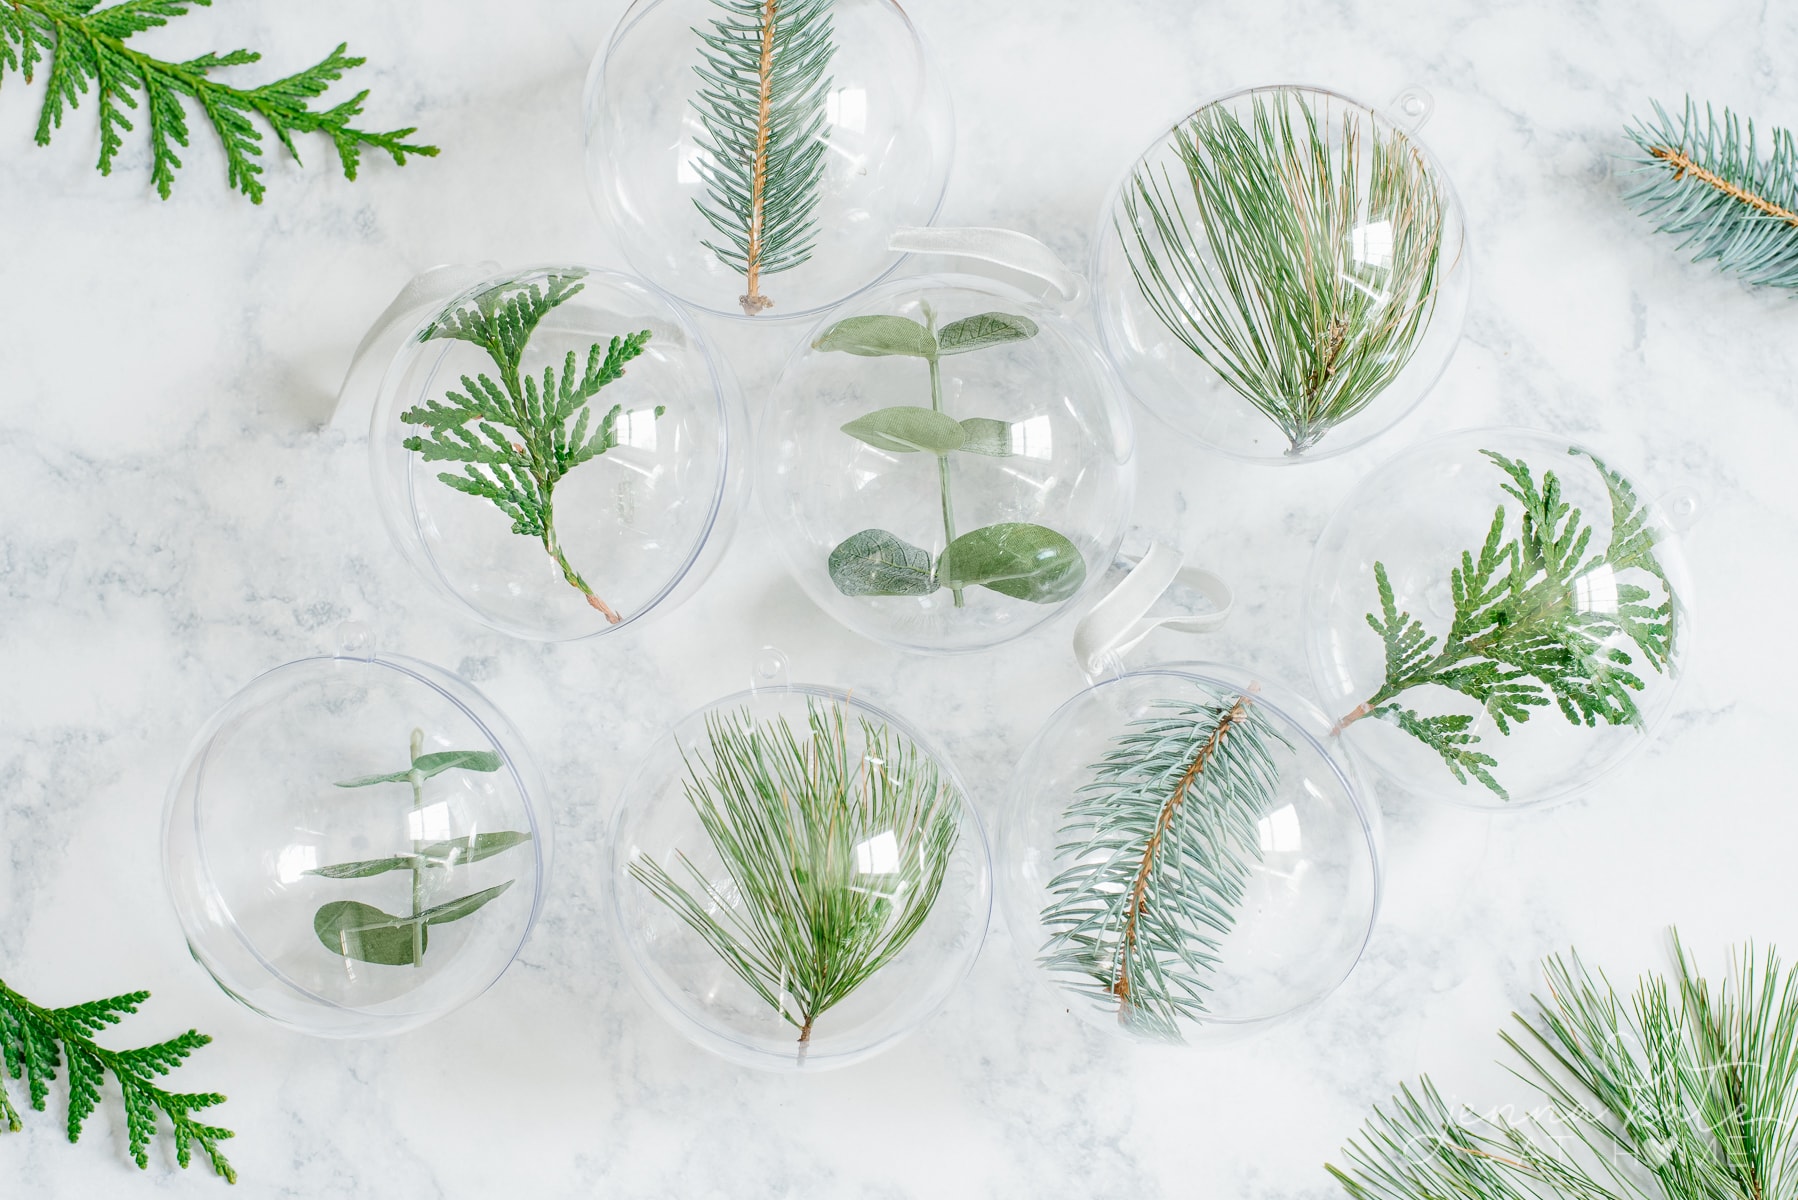 DIY minimalist Christmas tree ornaments filled with fresh greenery